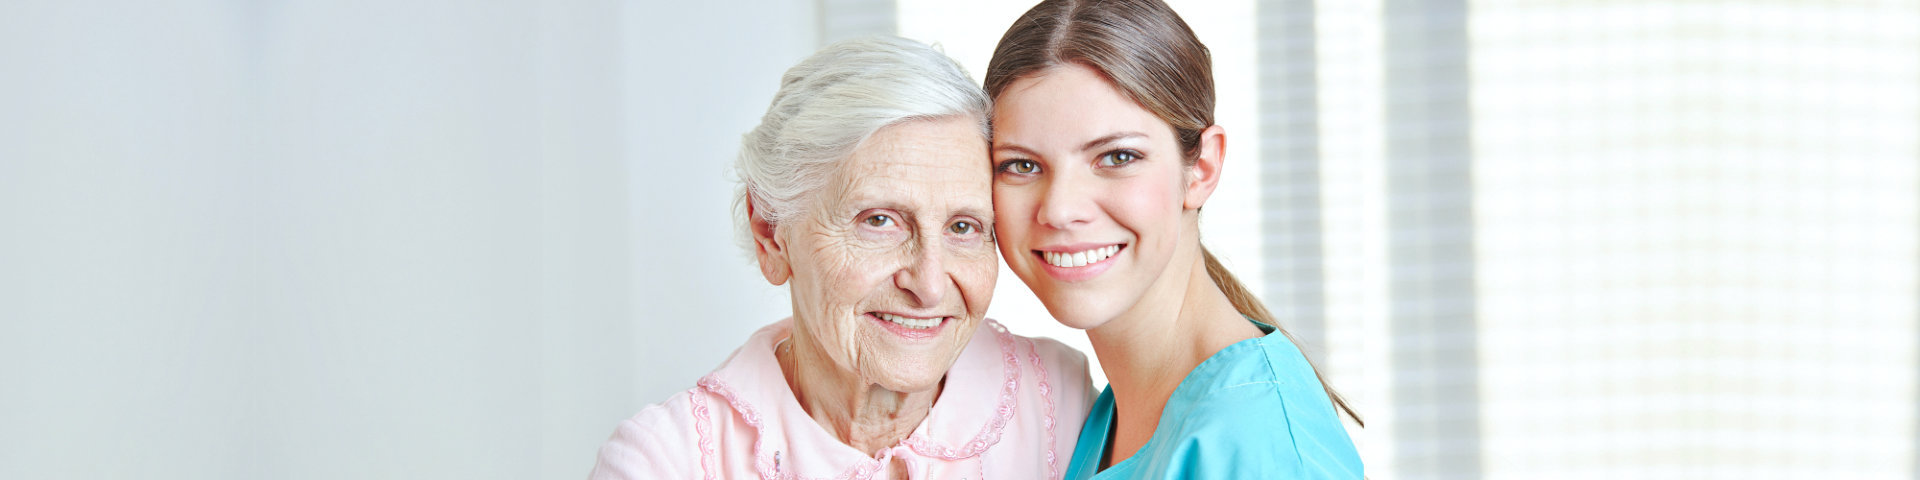 Caregiver embracing happy senior